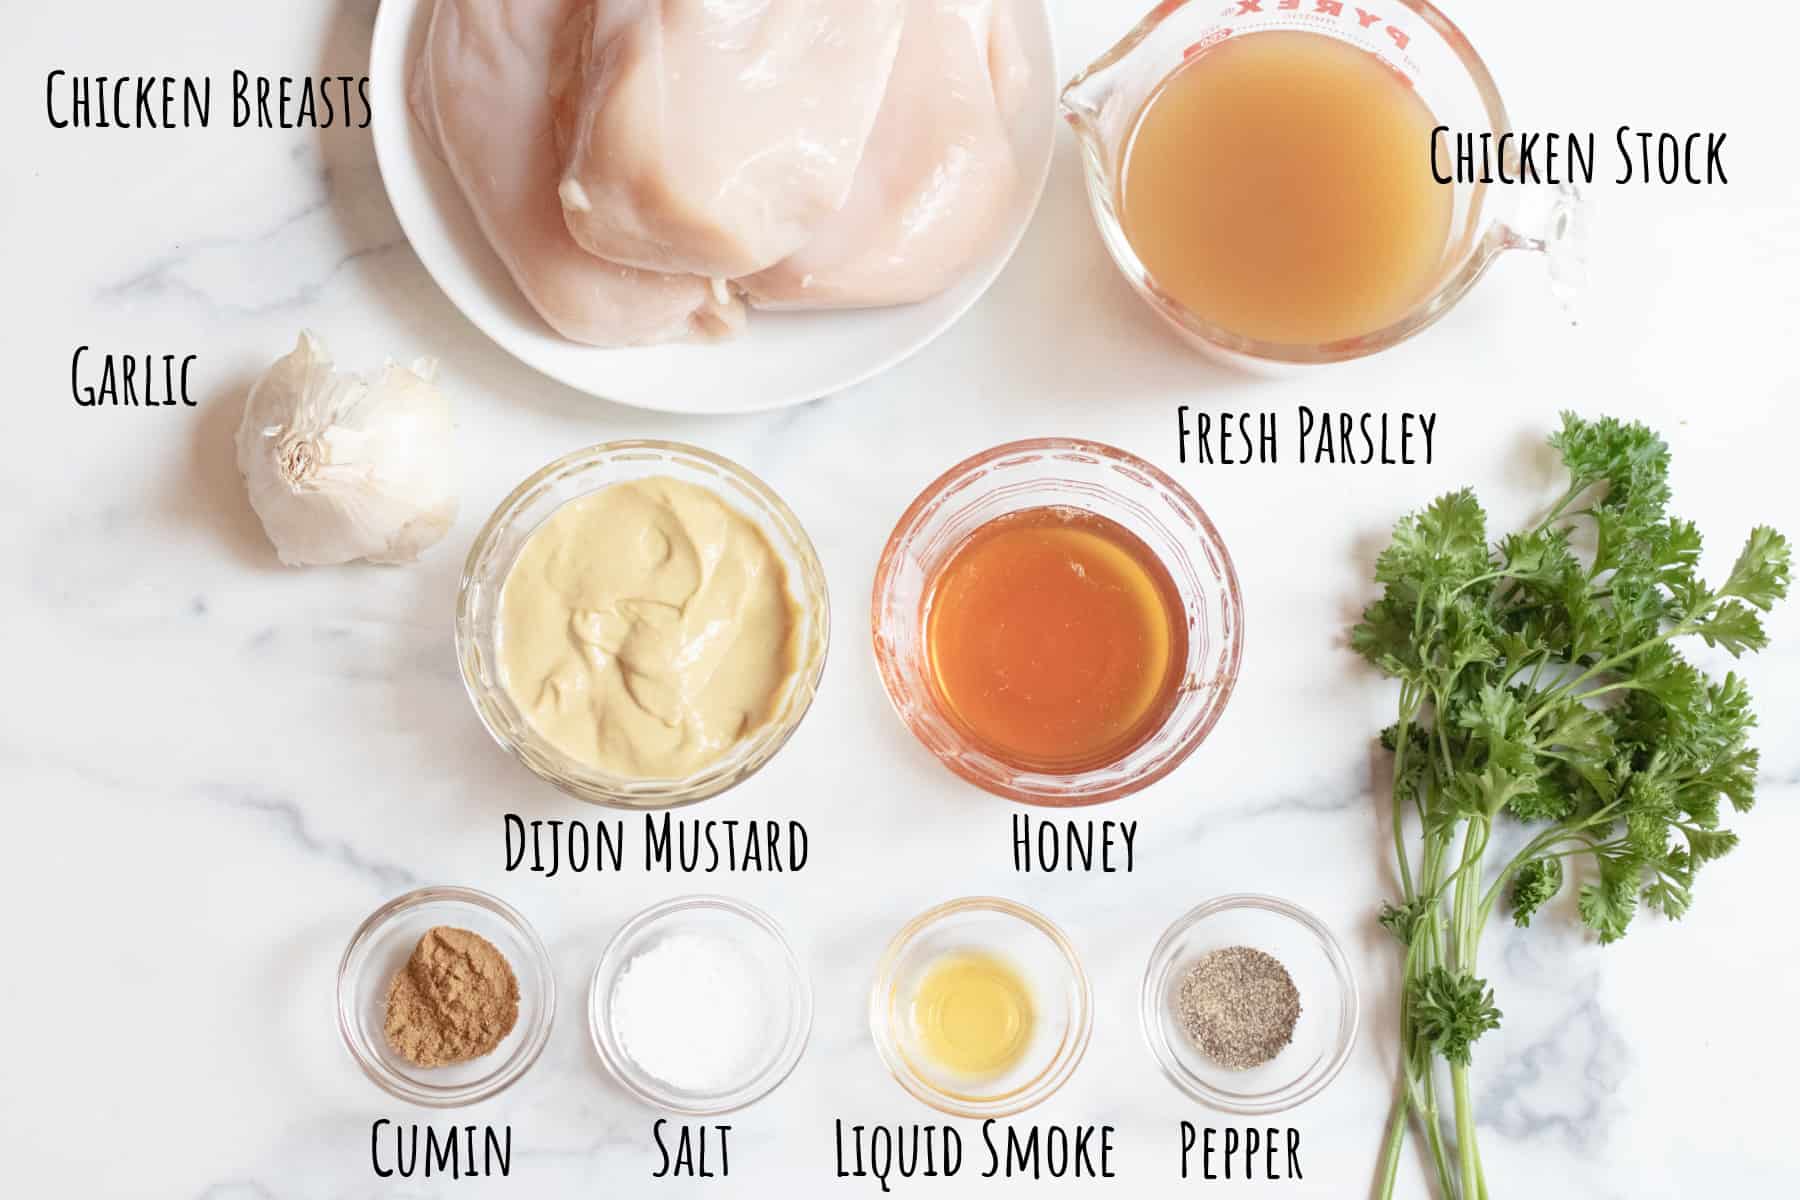 chicken, garlic, stock, parsley, mustard, honey, spices in bowls.